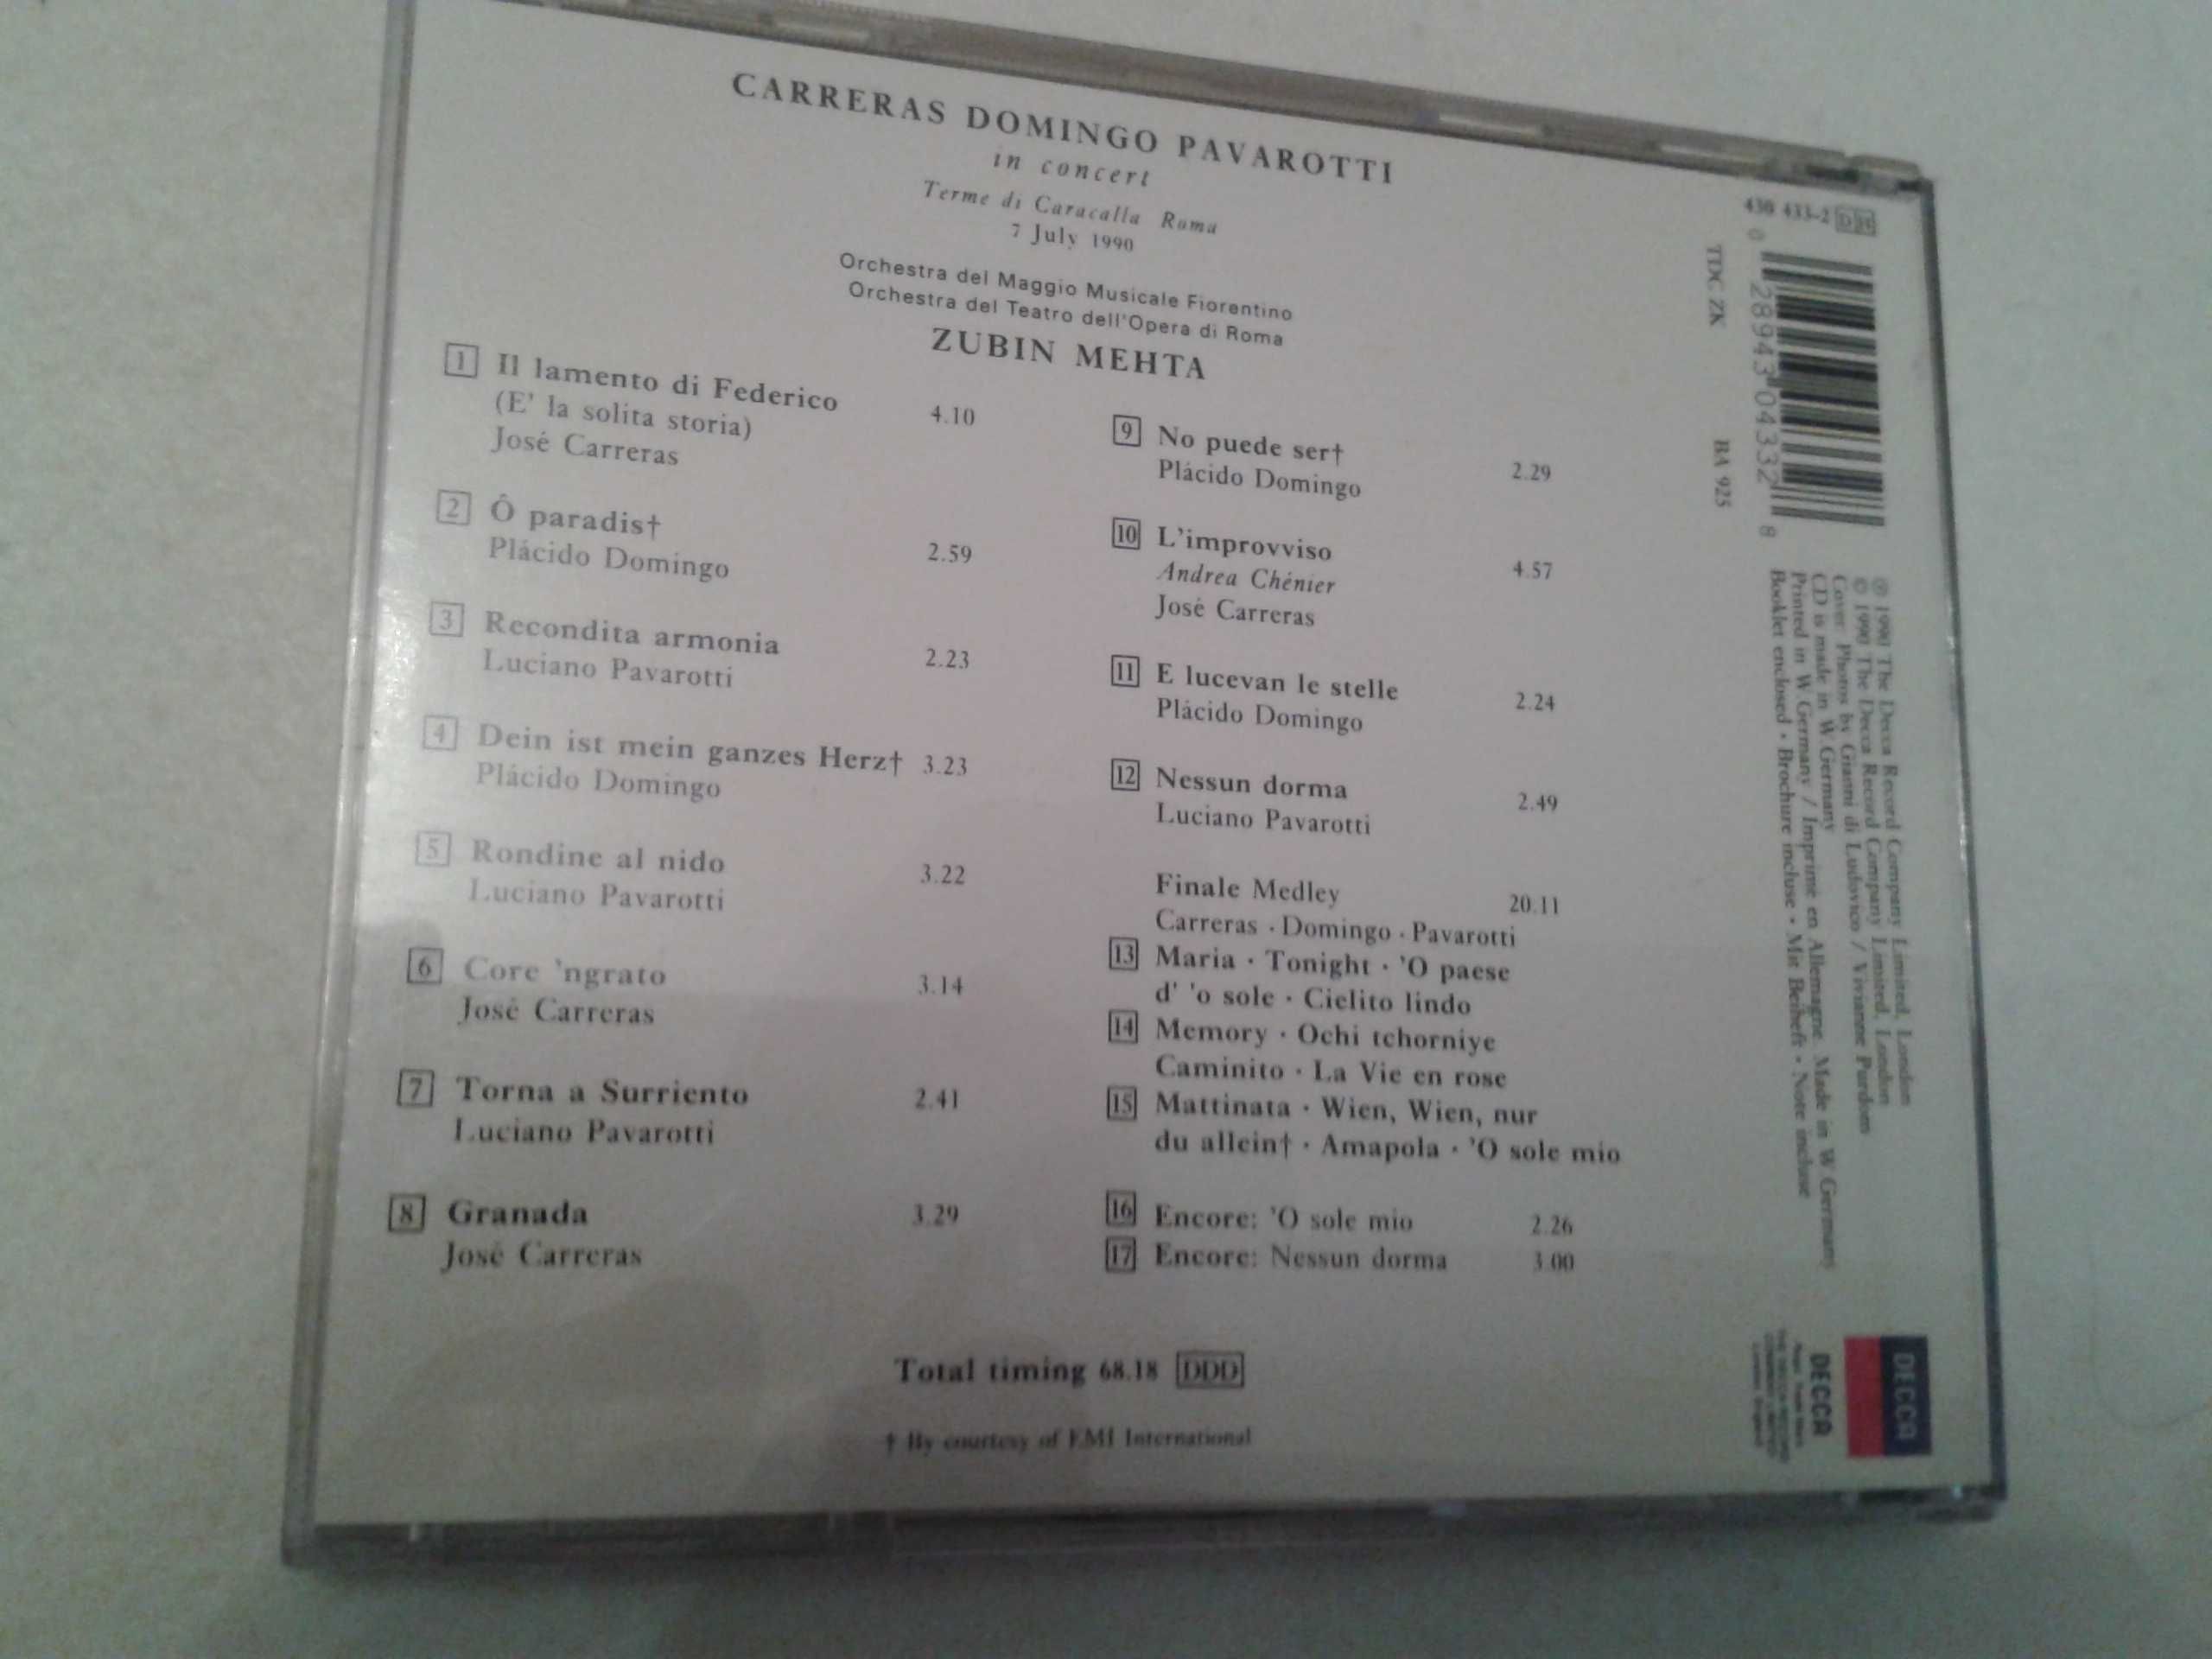 DISCOS CD música intérpretes estrangeiros diversos -pop,rock,etc